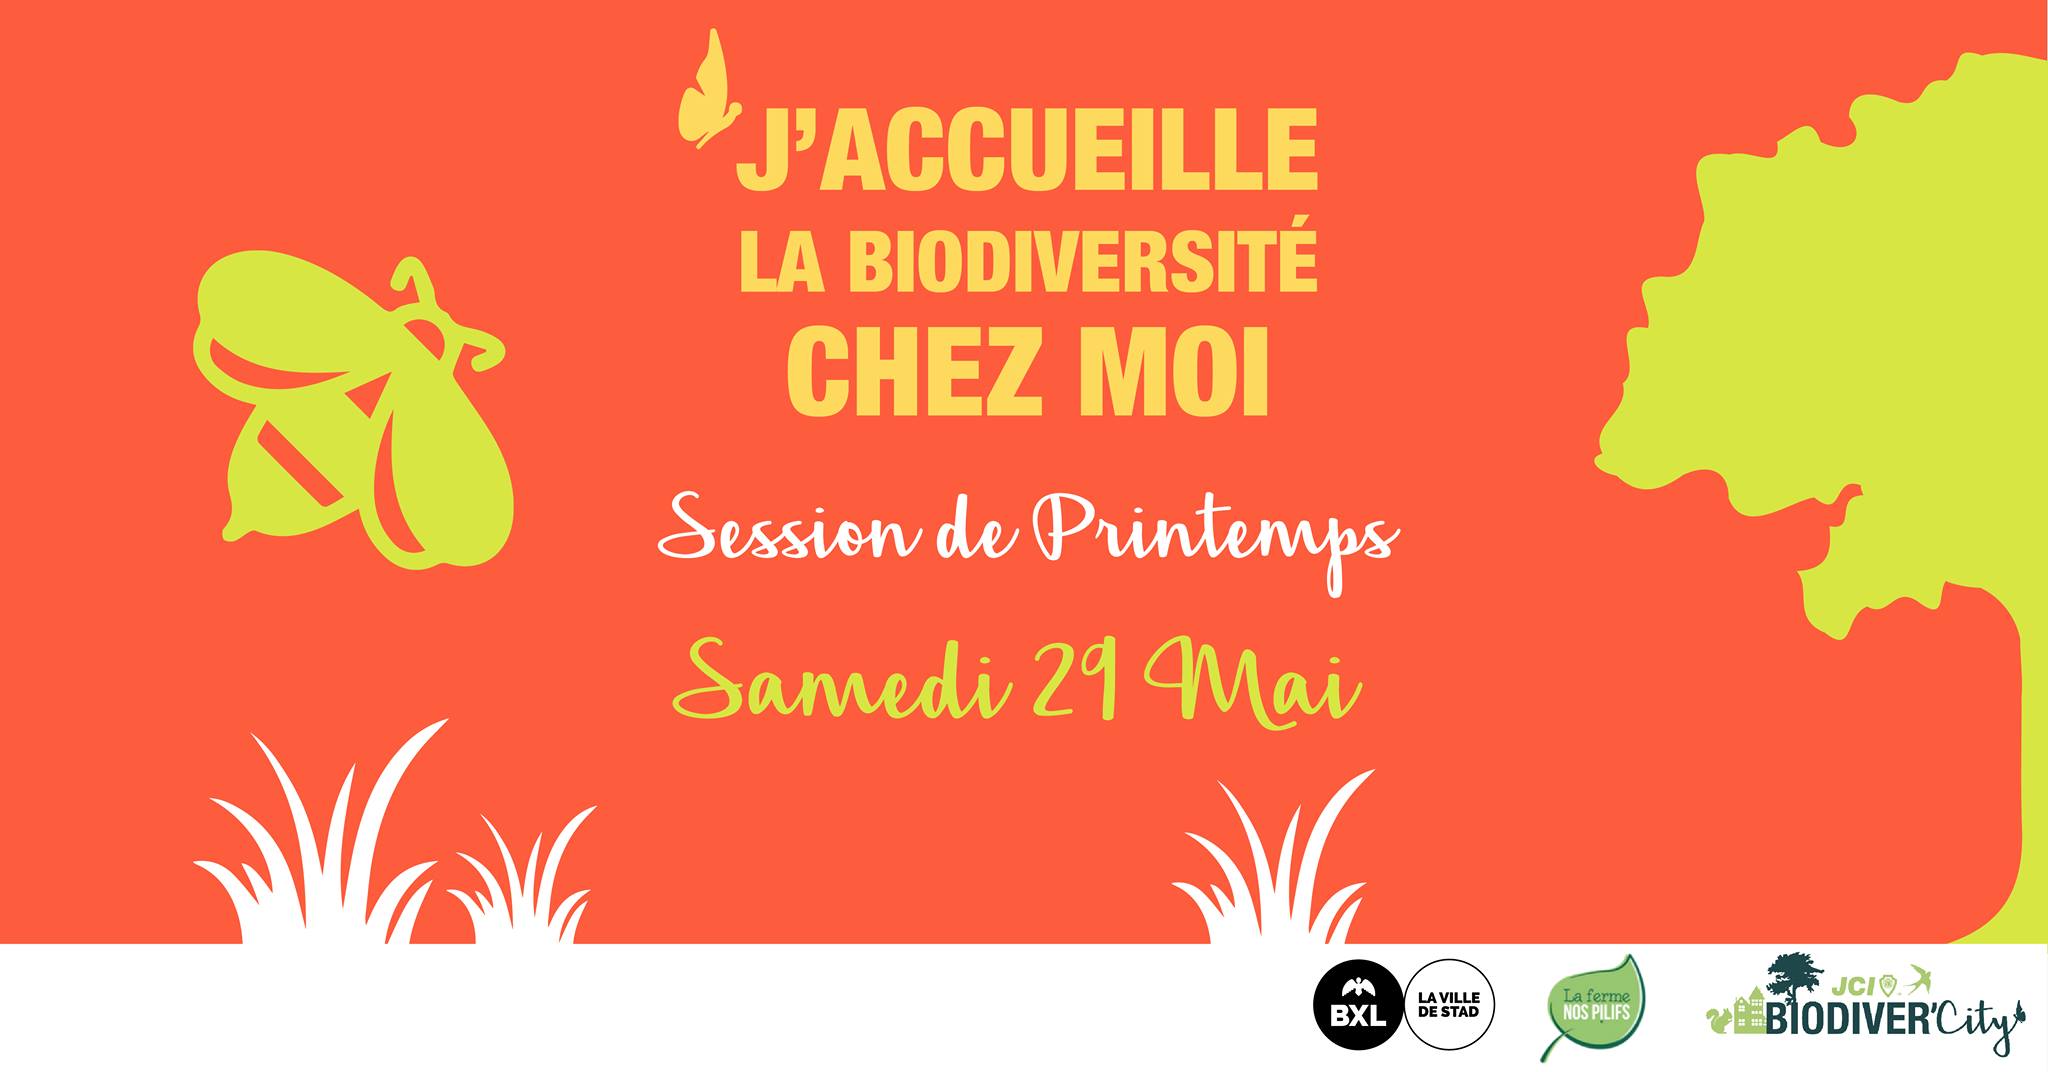 Samedi 29 mai : Atelier “J’accueille la biodiversité chez moi”